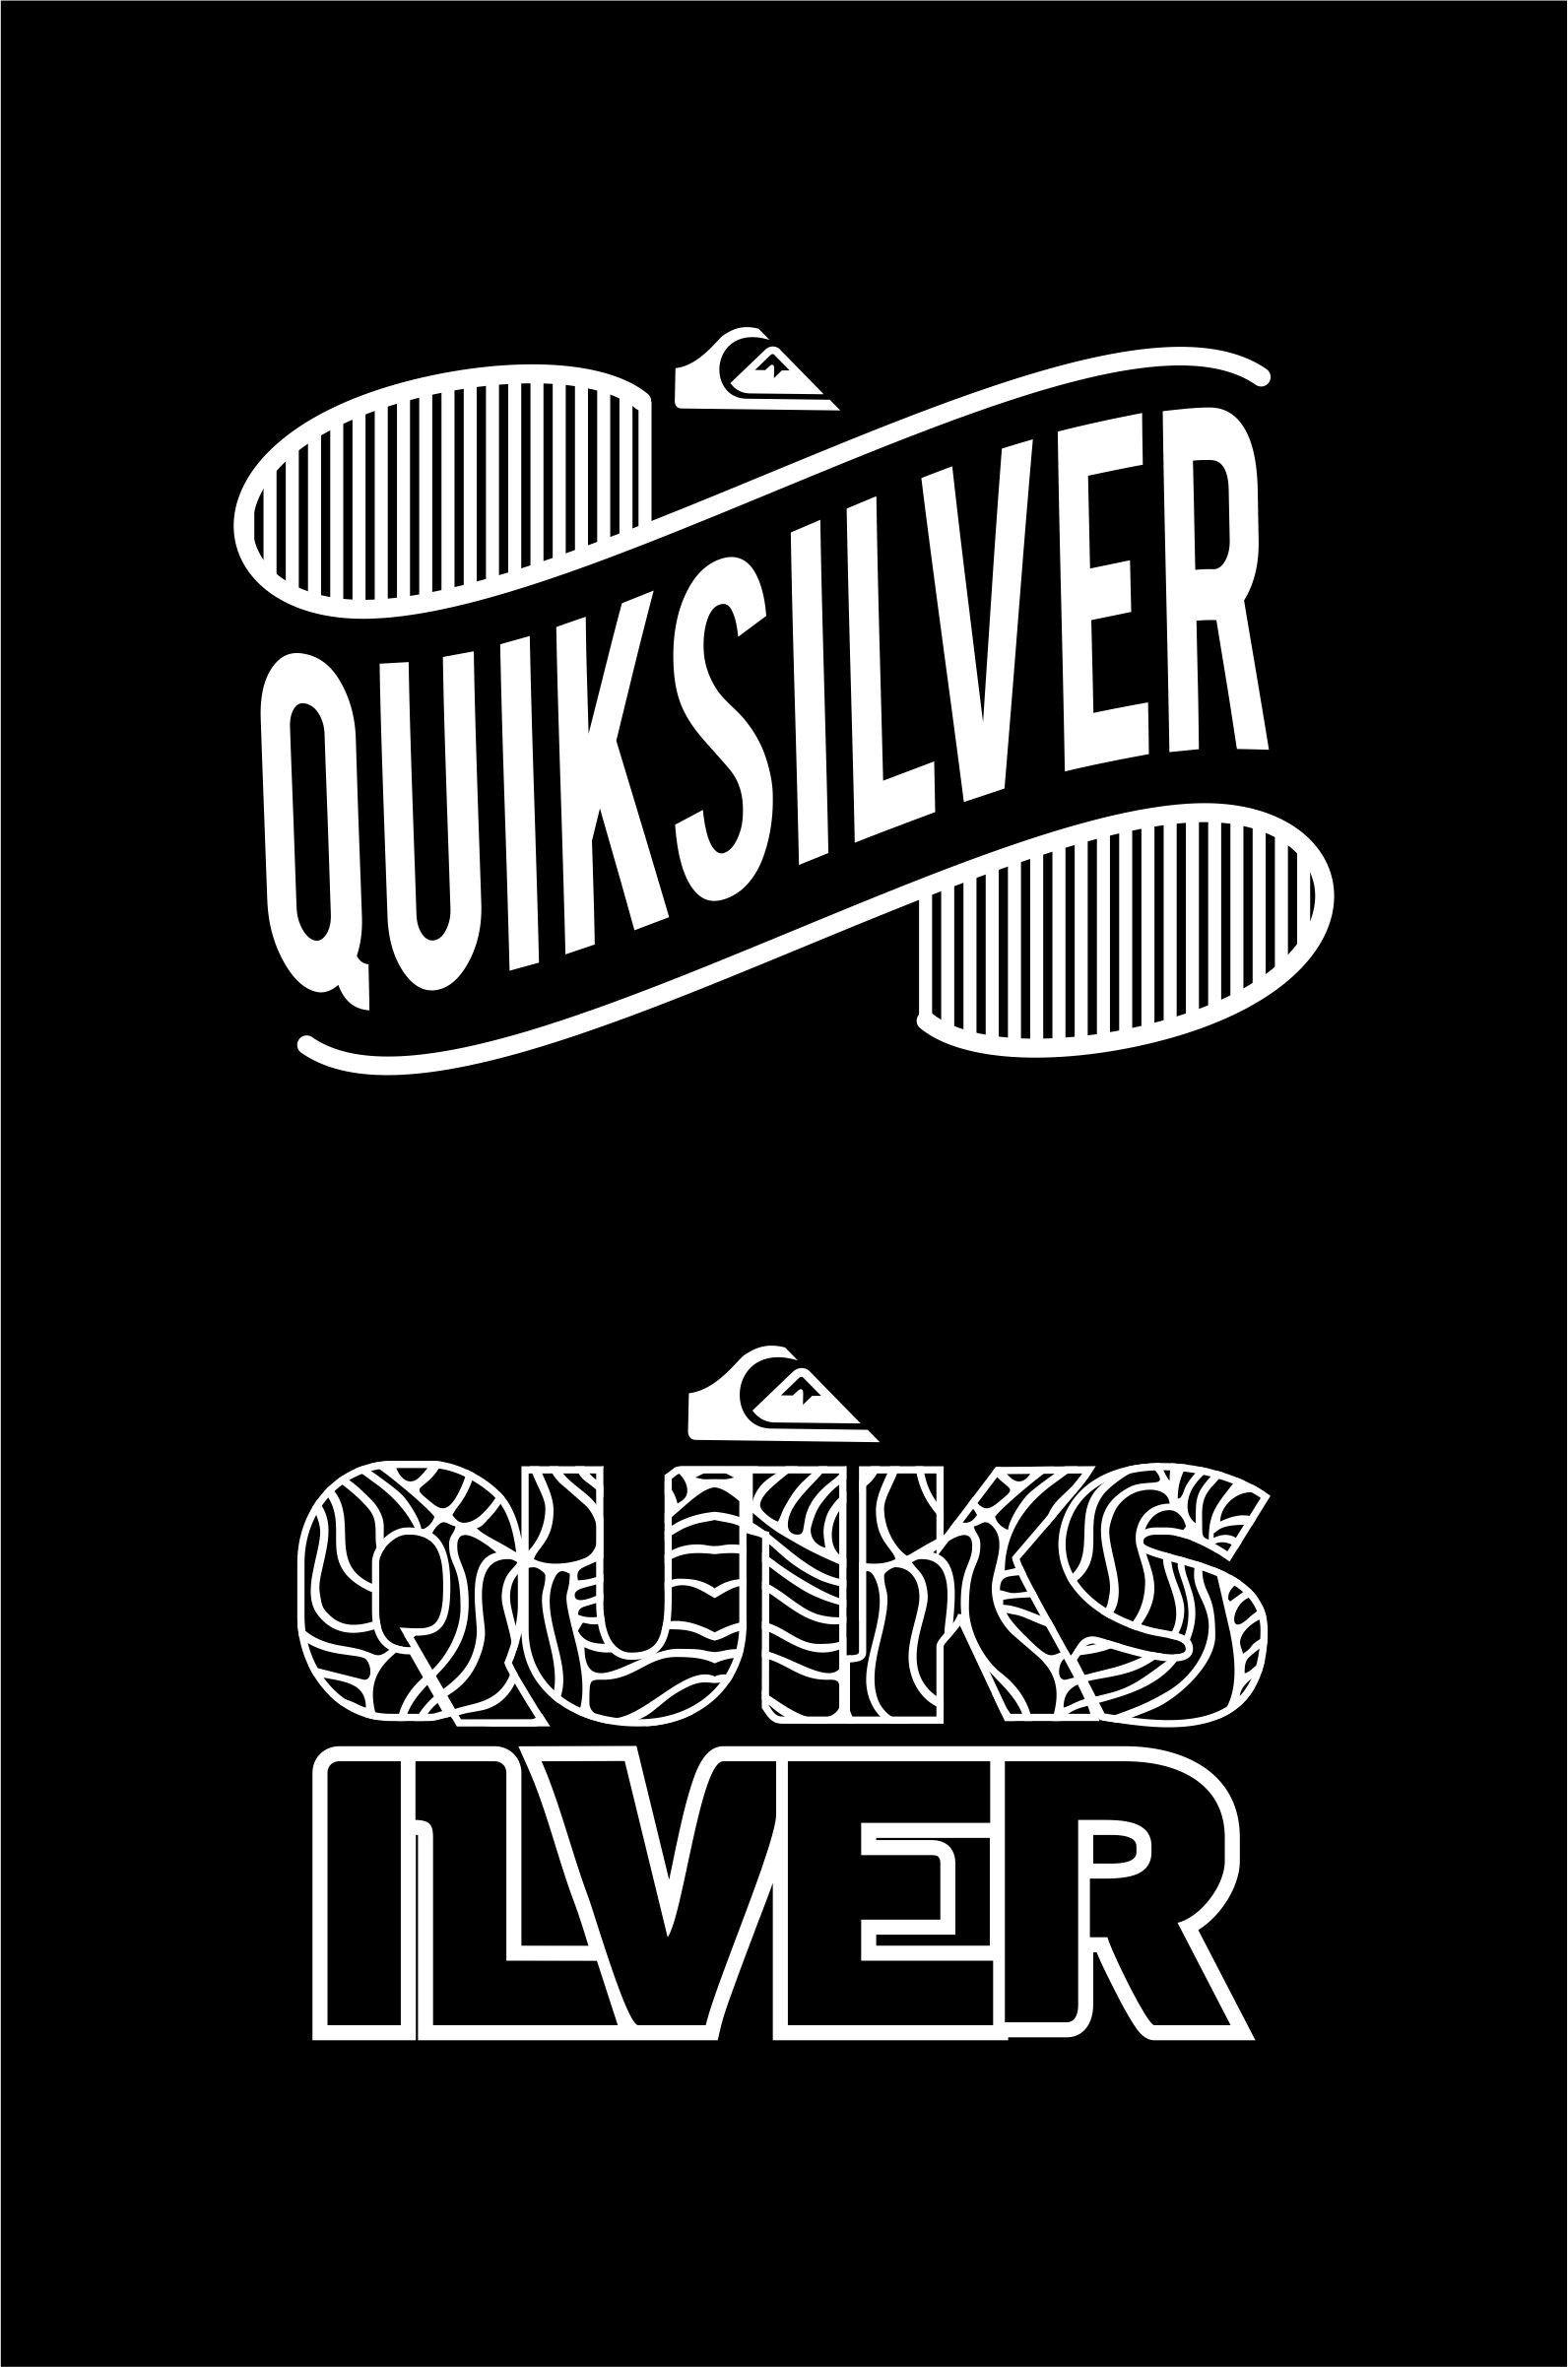 Quiksilver Logo Wallpaper HD